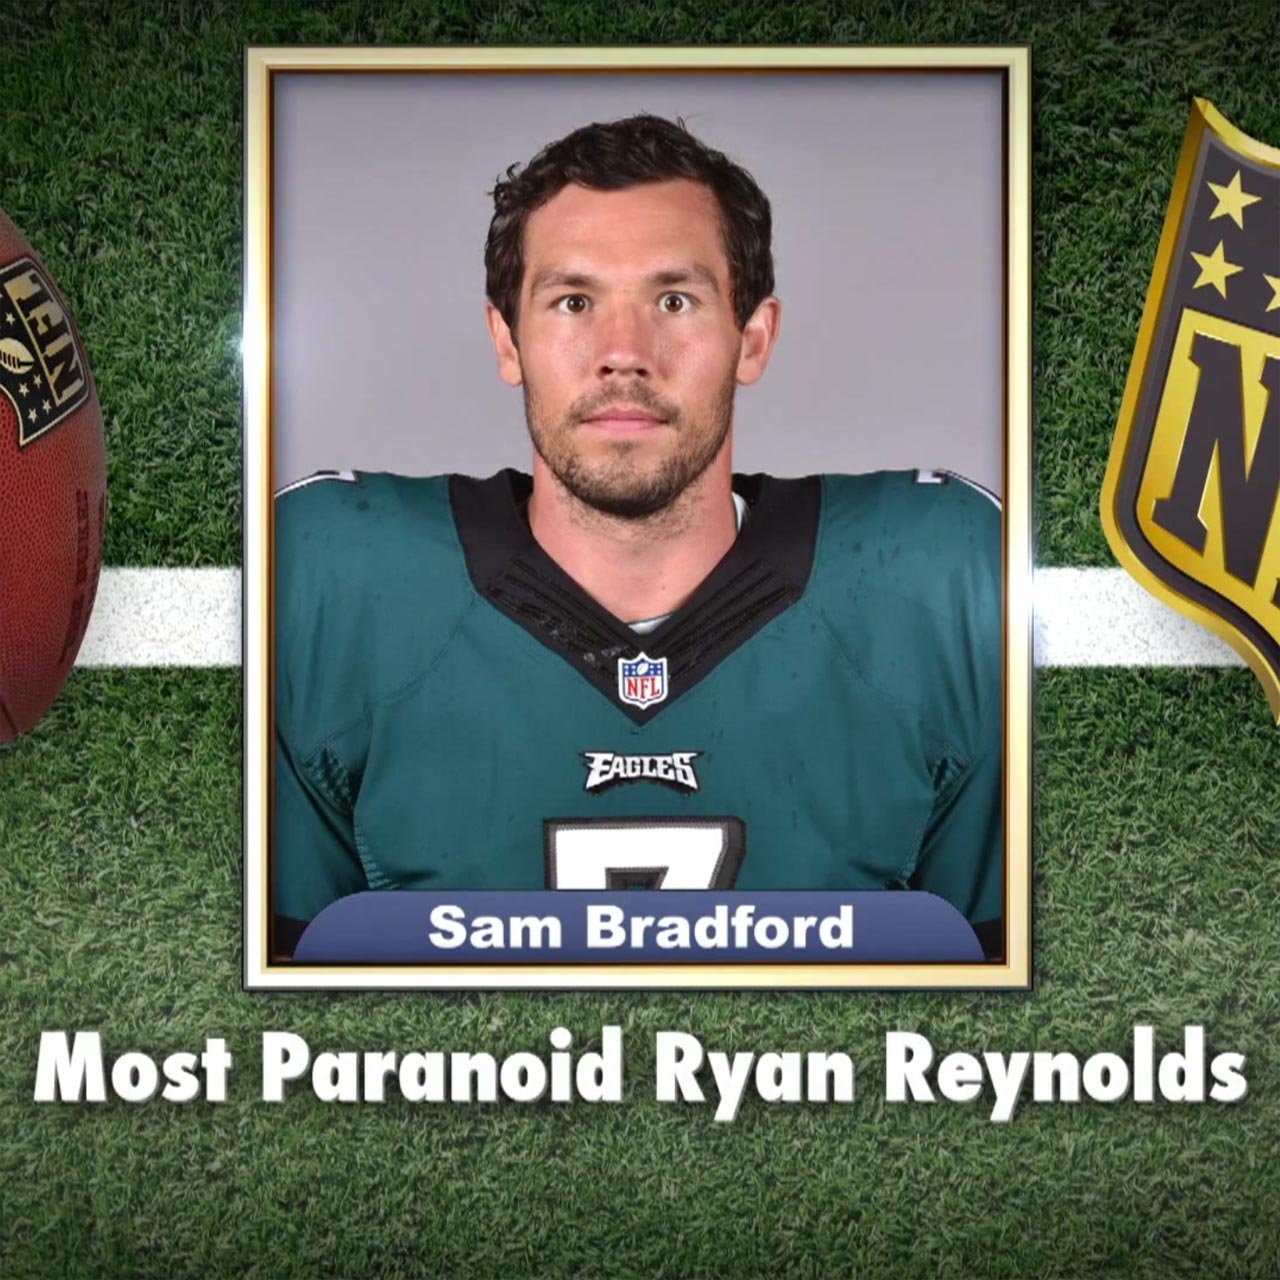 Eagles quarterback Sam Bradford is the Most Paranoid Ryan Reynolds